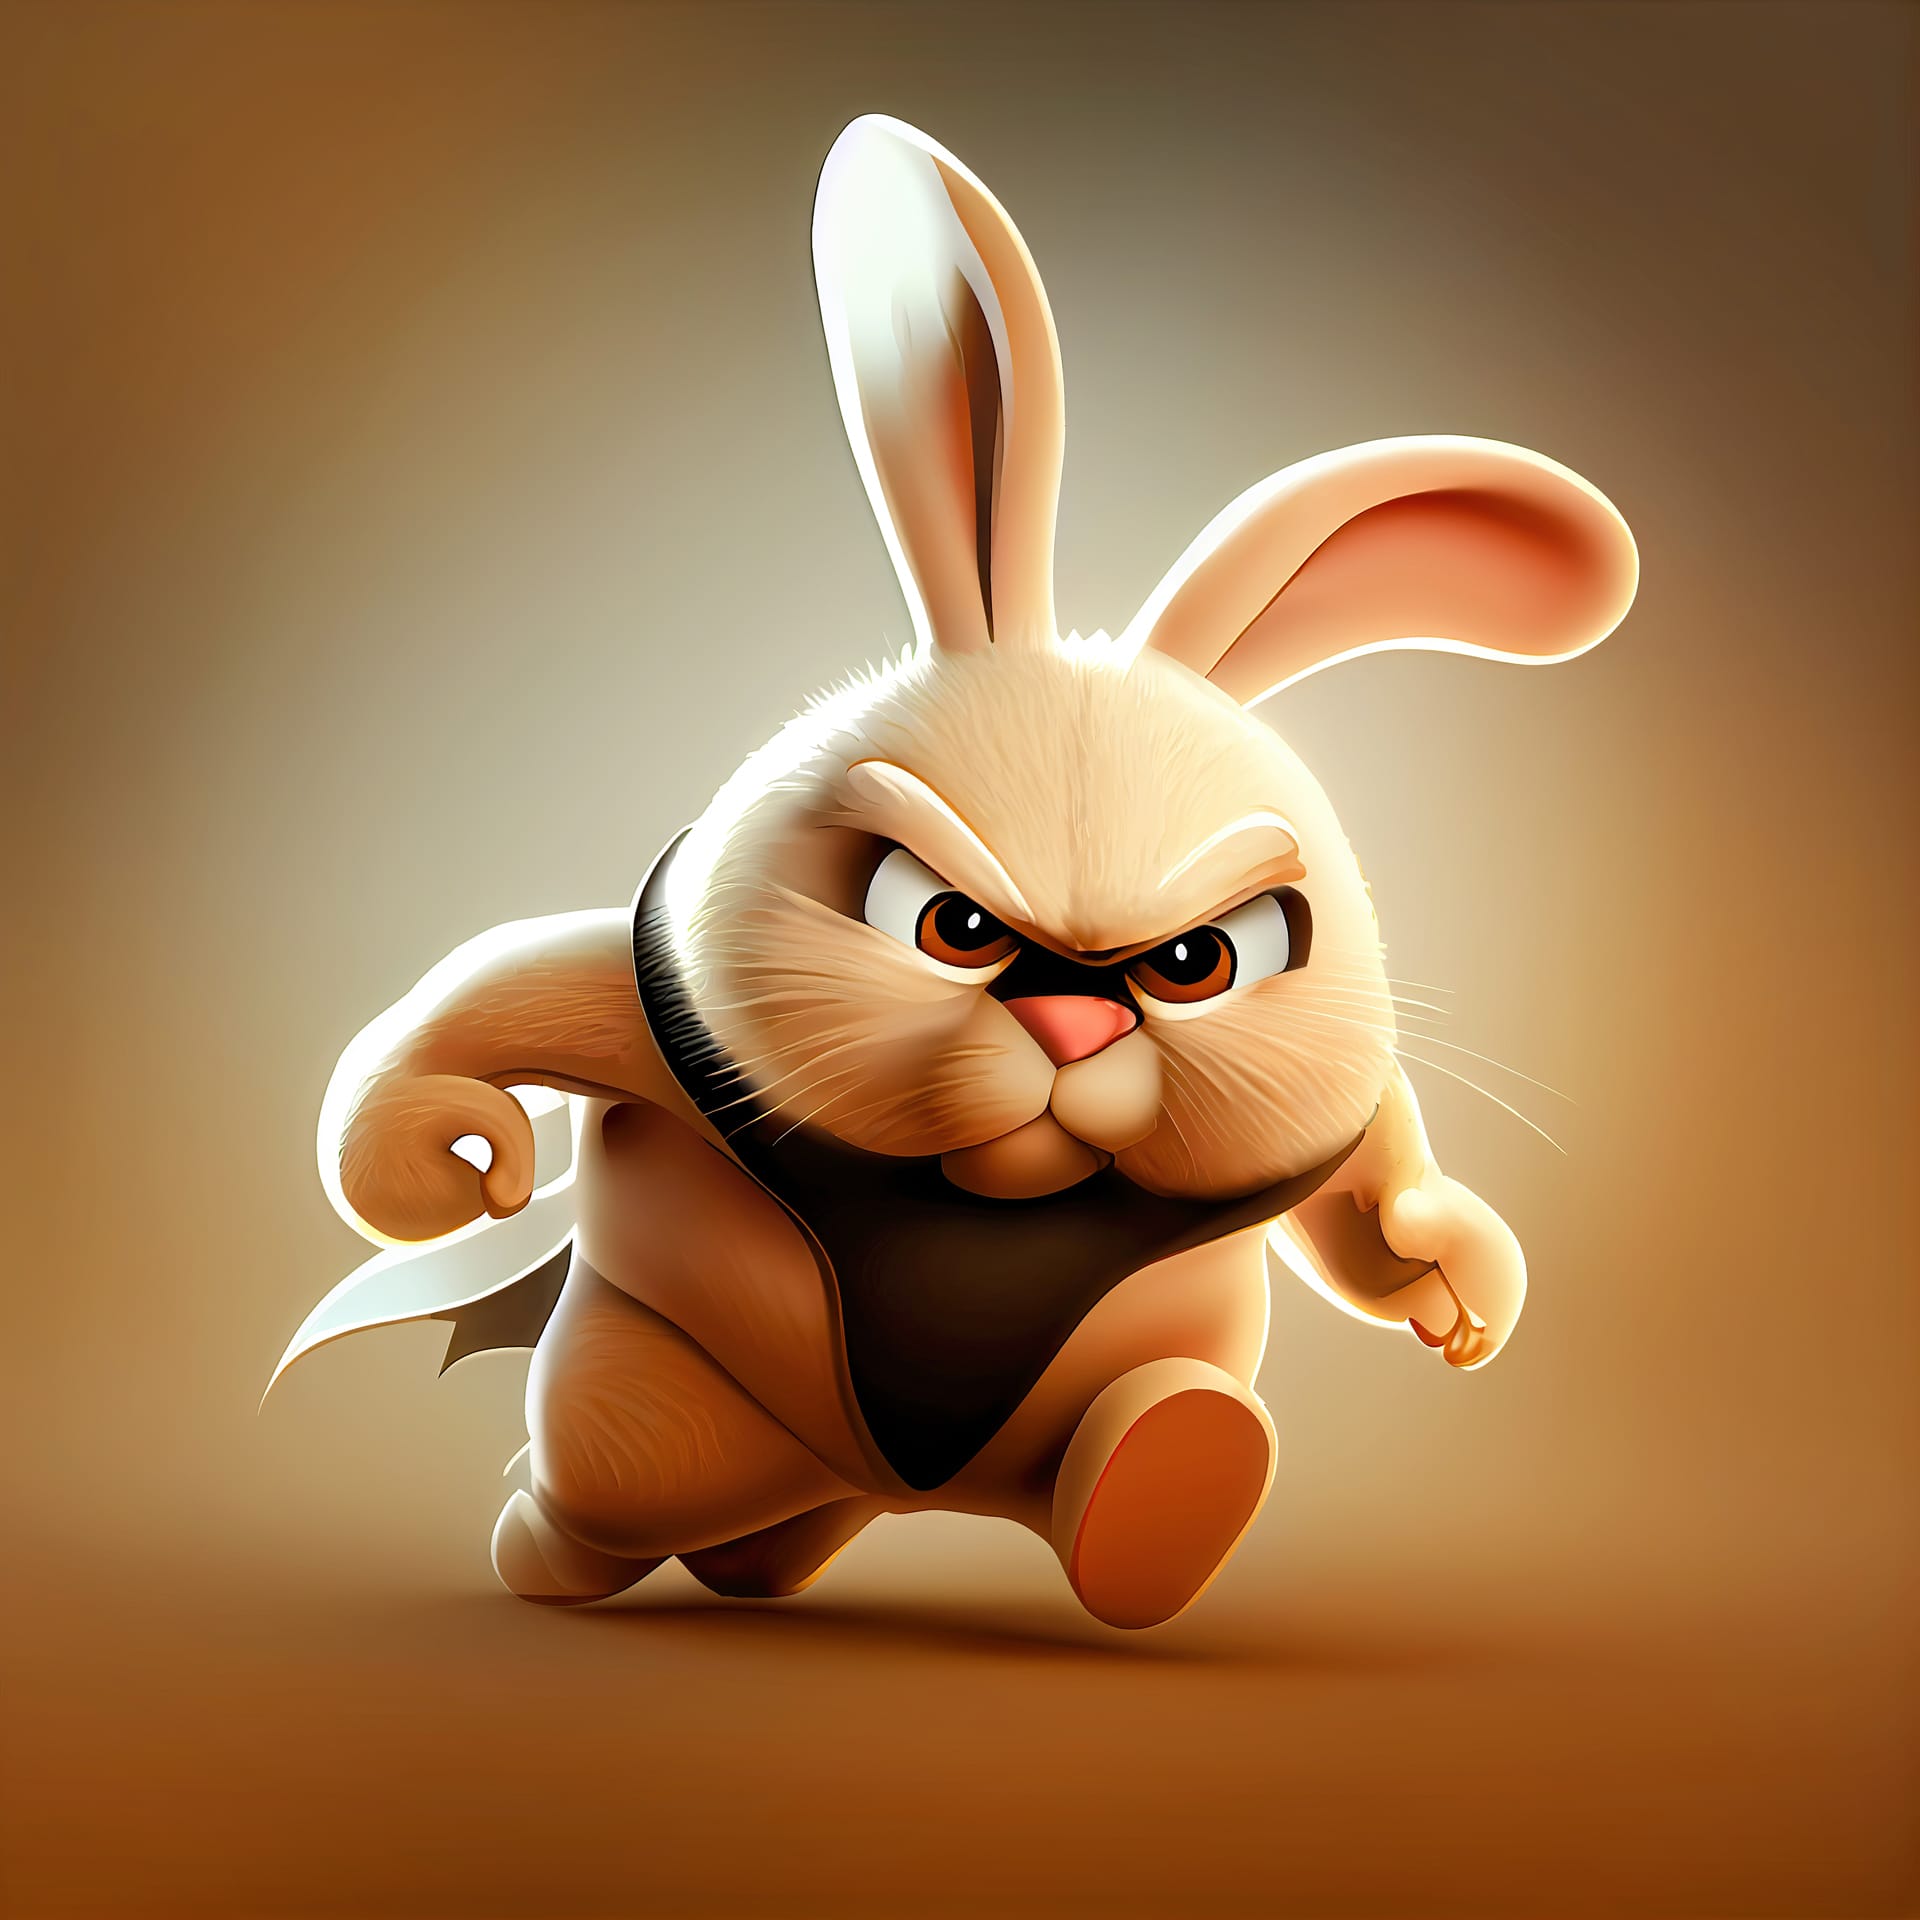 Cartoon style cute rabbit superhero greeting card concept made with